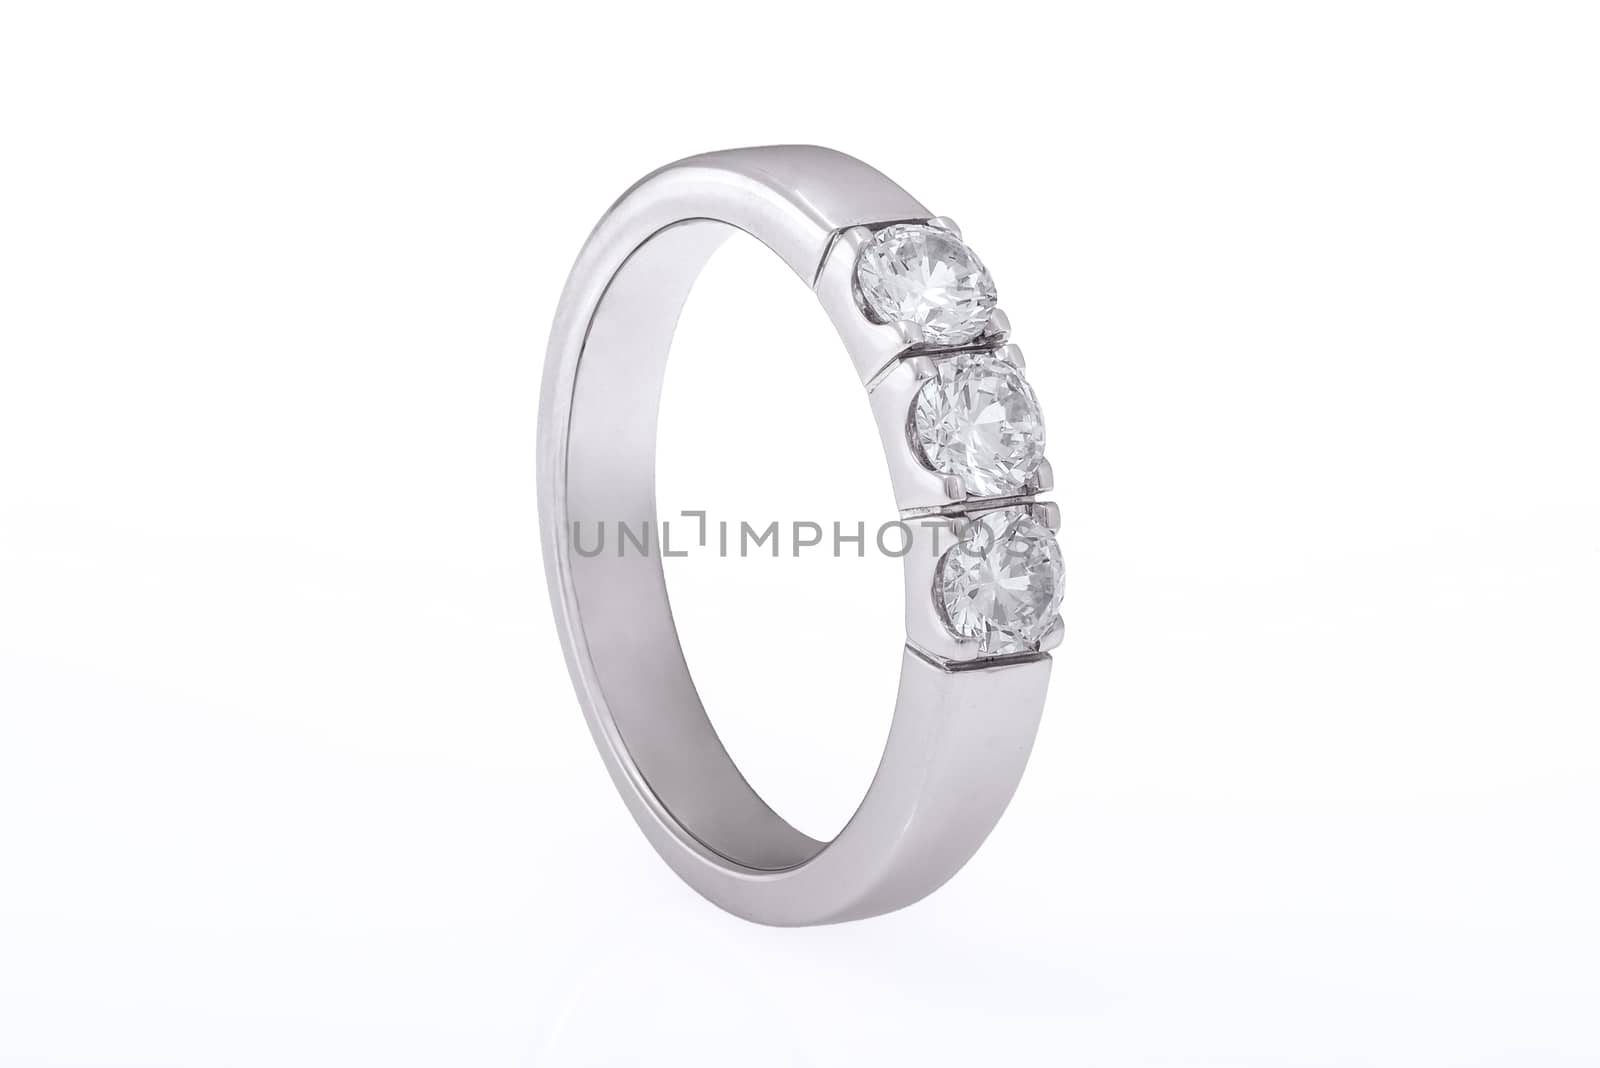 White gold wedding, engagement ring with diamonds on white background